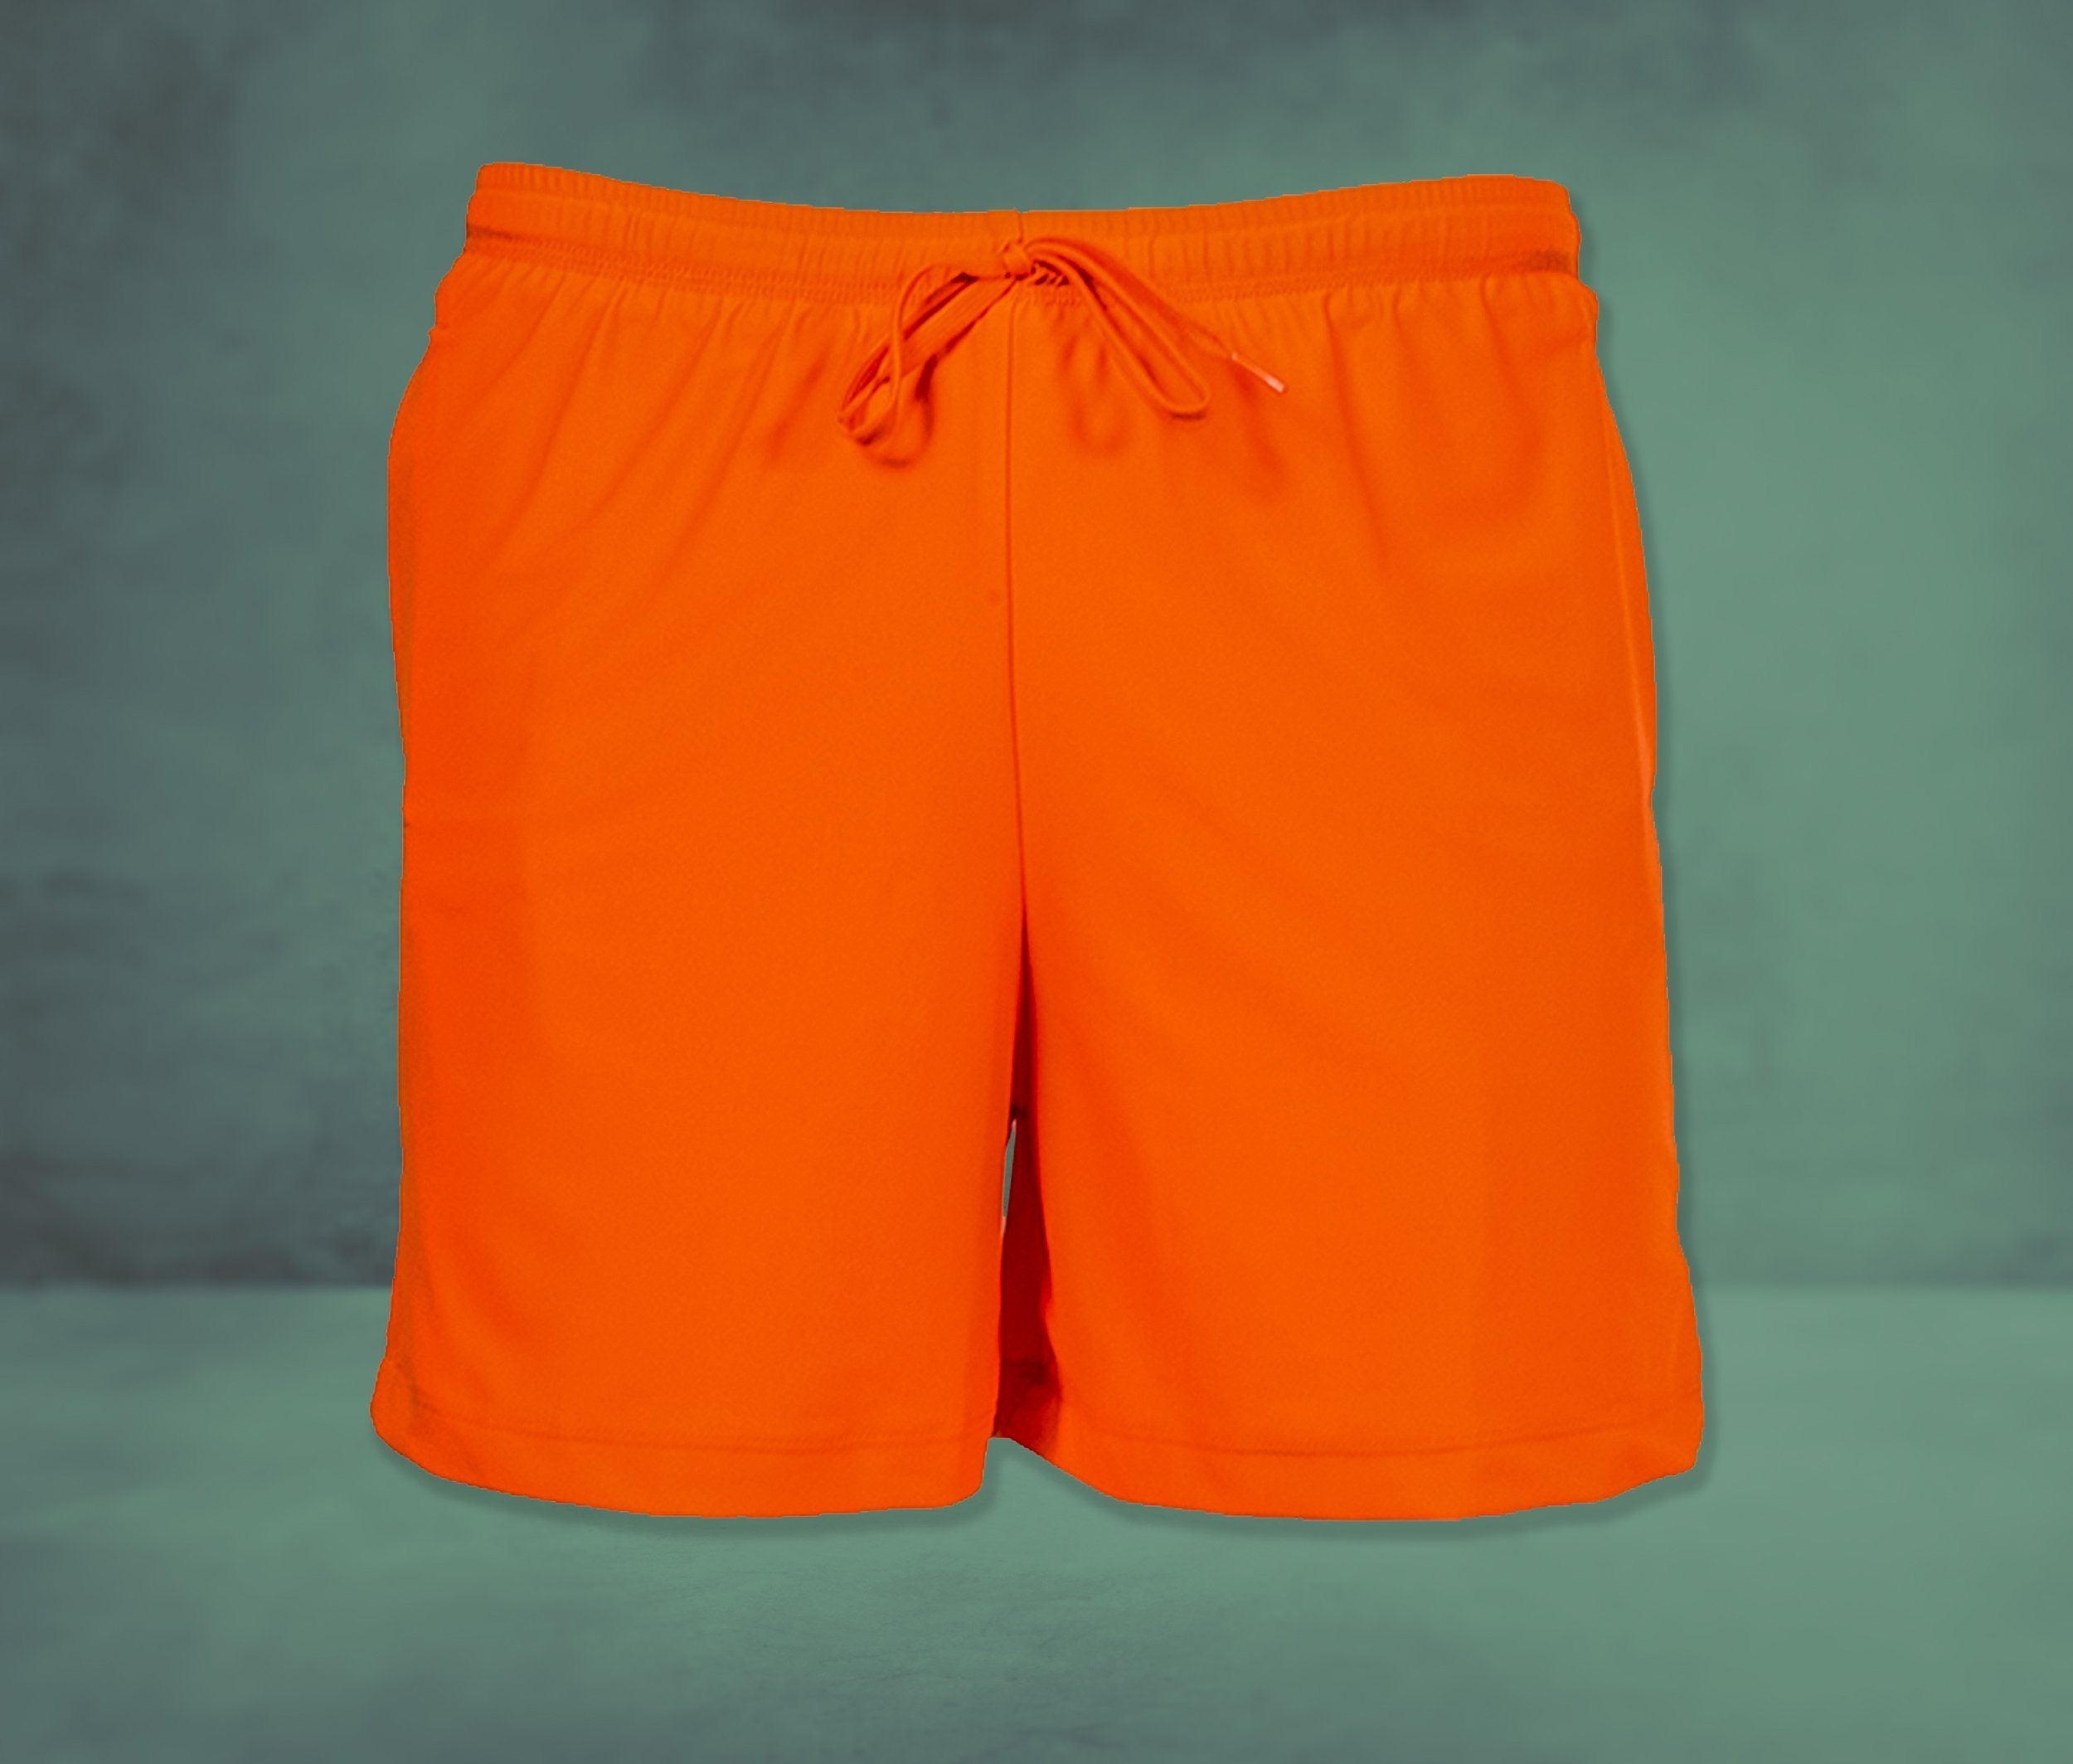 Agent Orange” Expensive Brand Neon Shorts